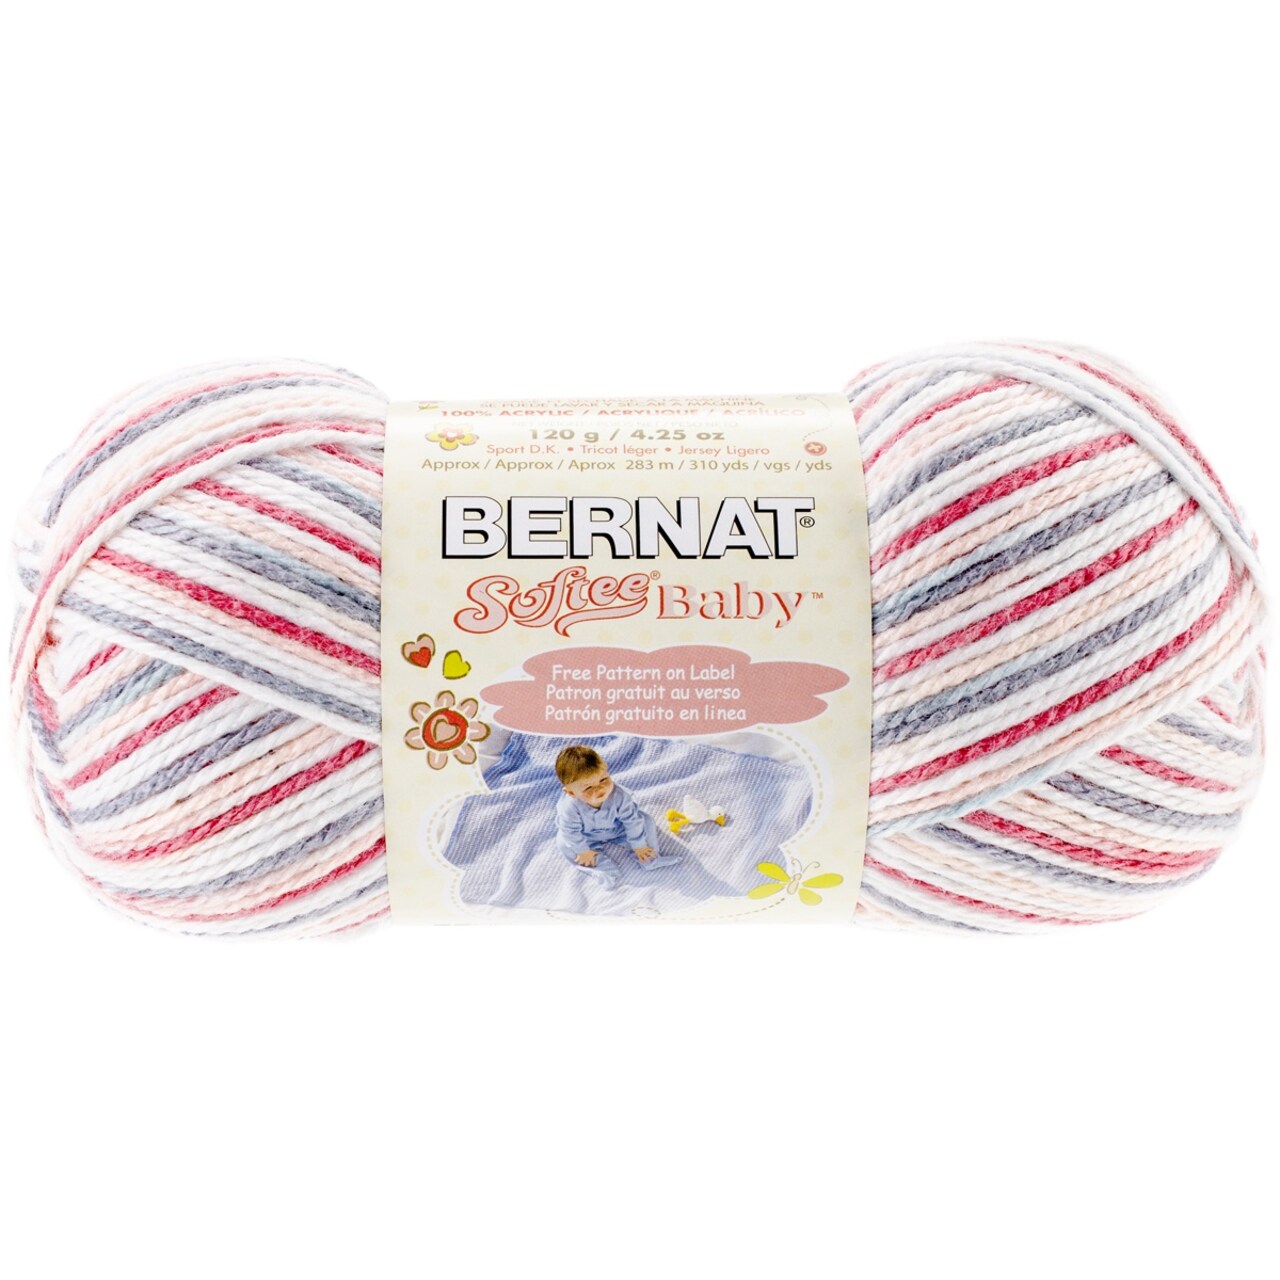 Bernat Softee Baby Princess Pebbles Yarn - 3 Pack of 120g/4.25oz - Acrylic  - 3 DK (Light) - 310 Yards - Knitting/Crochet